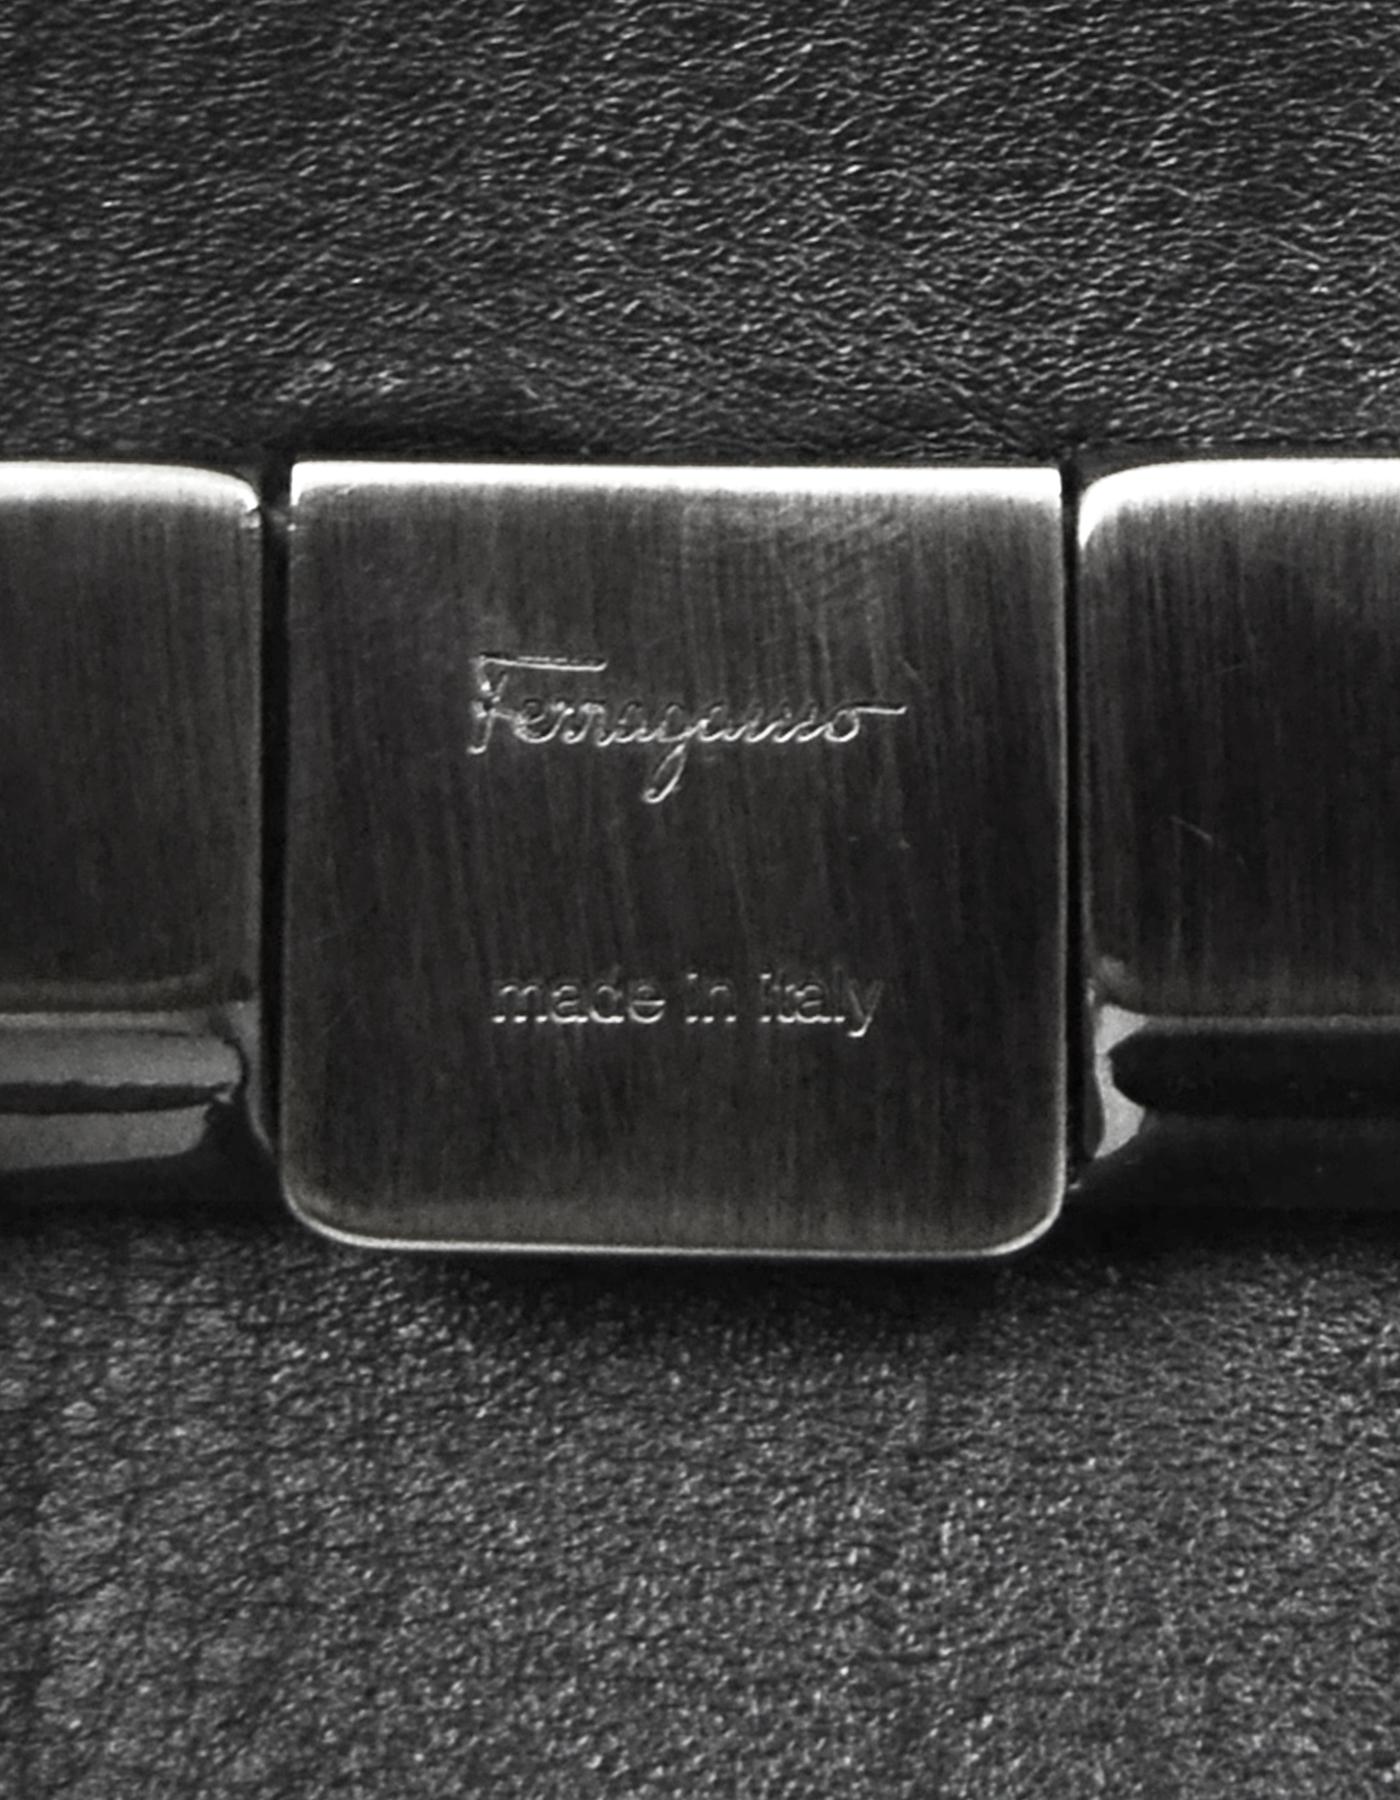 Ferragamo Black Patent Leather Vera Bow Belt sz 27